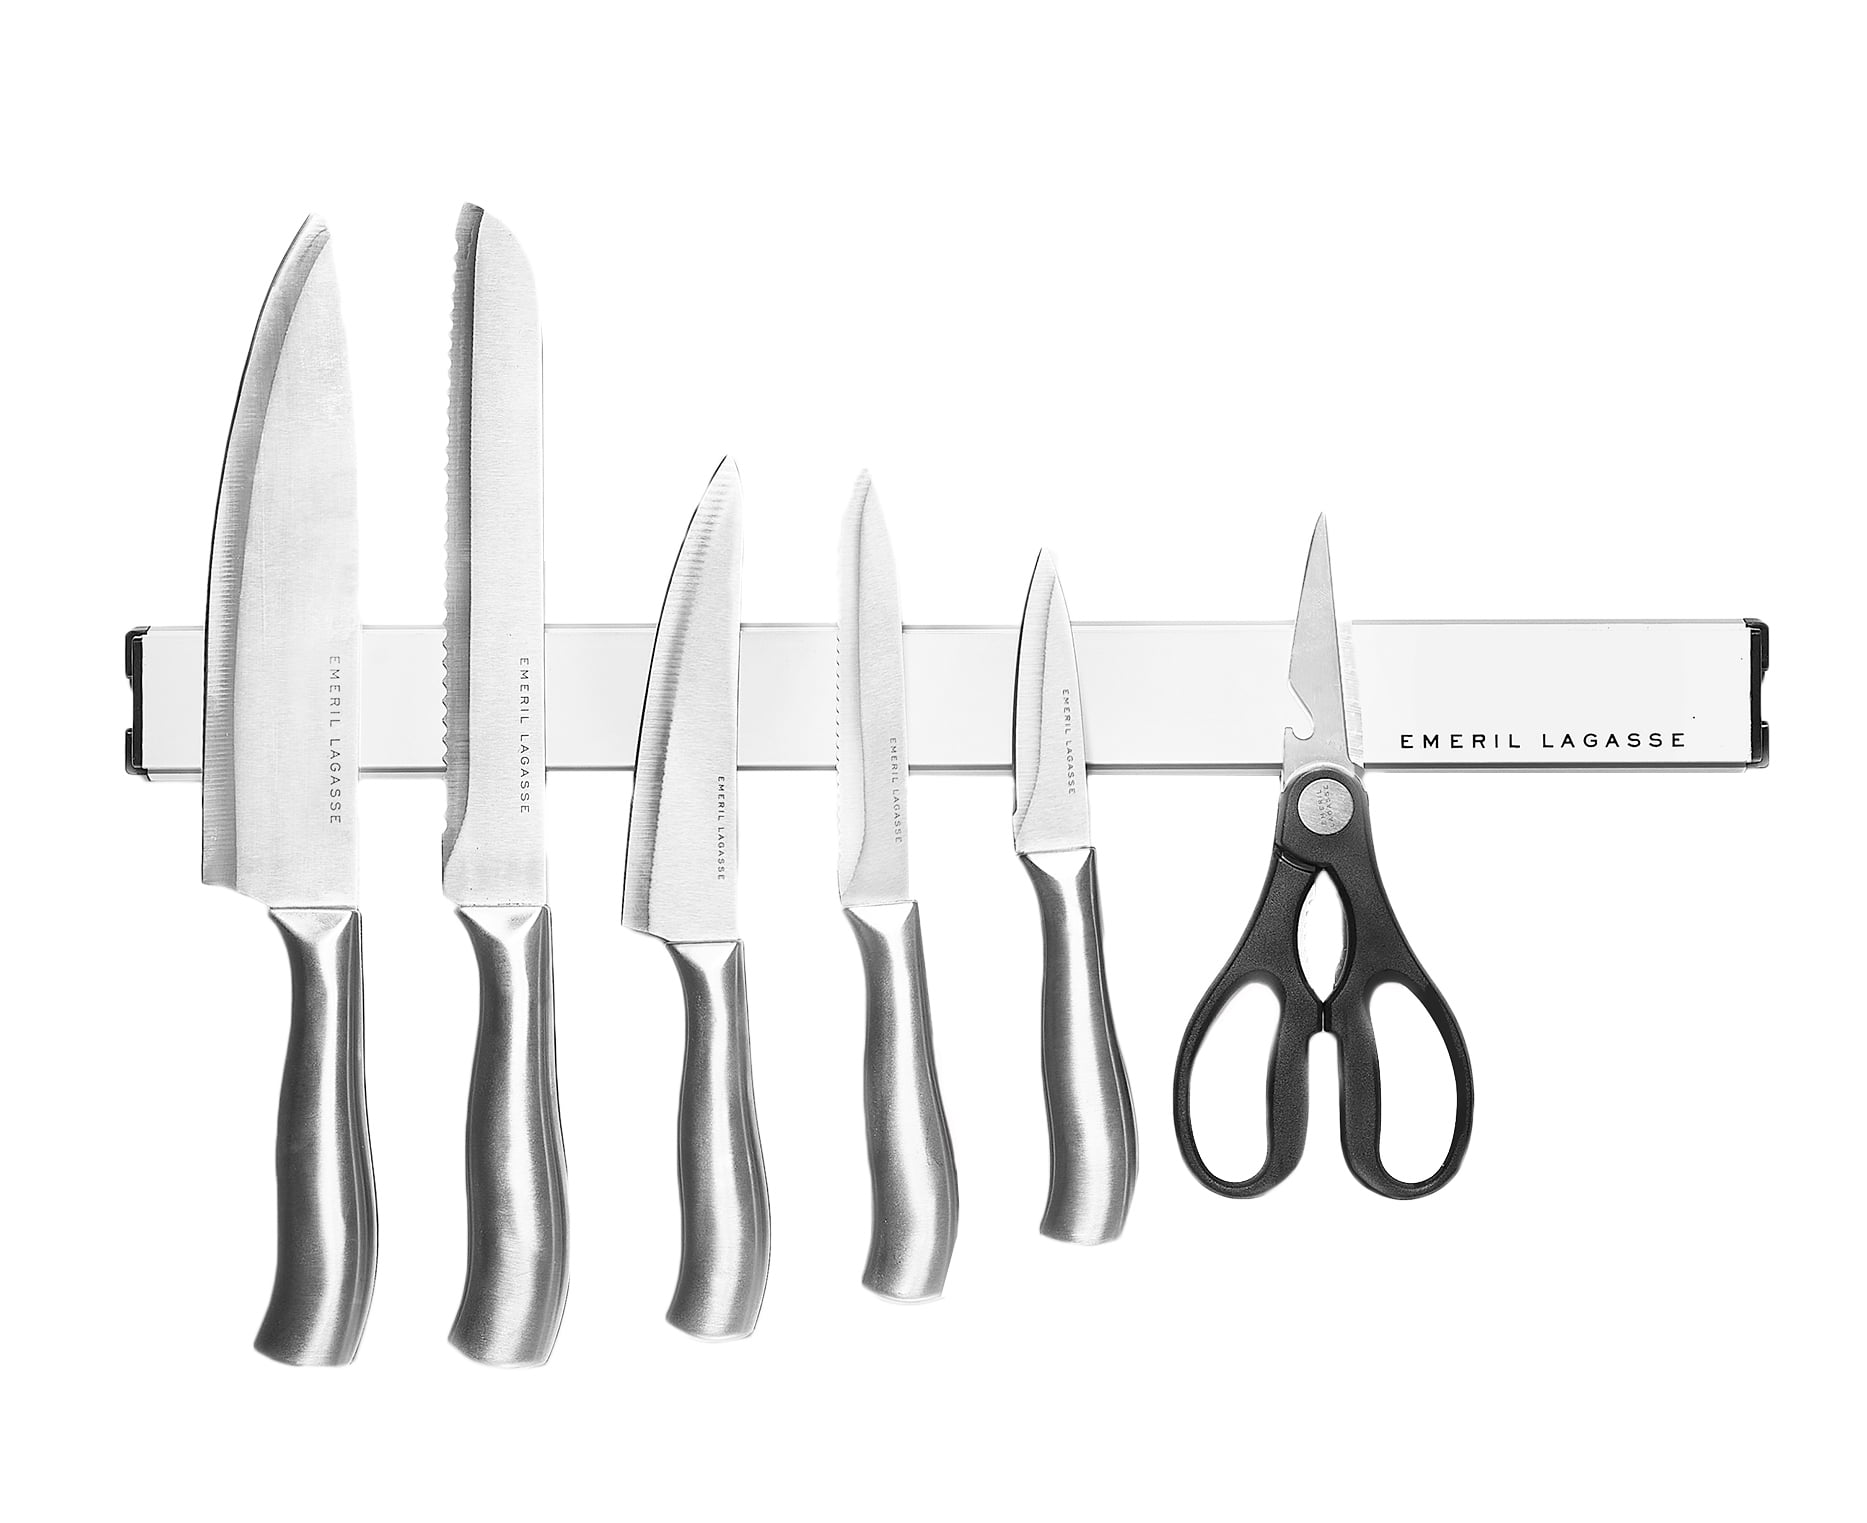 Emeril Lagasse Santoku 2 Piece Knife Set (5-7 inch)